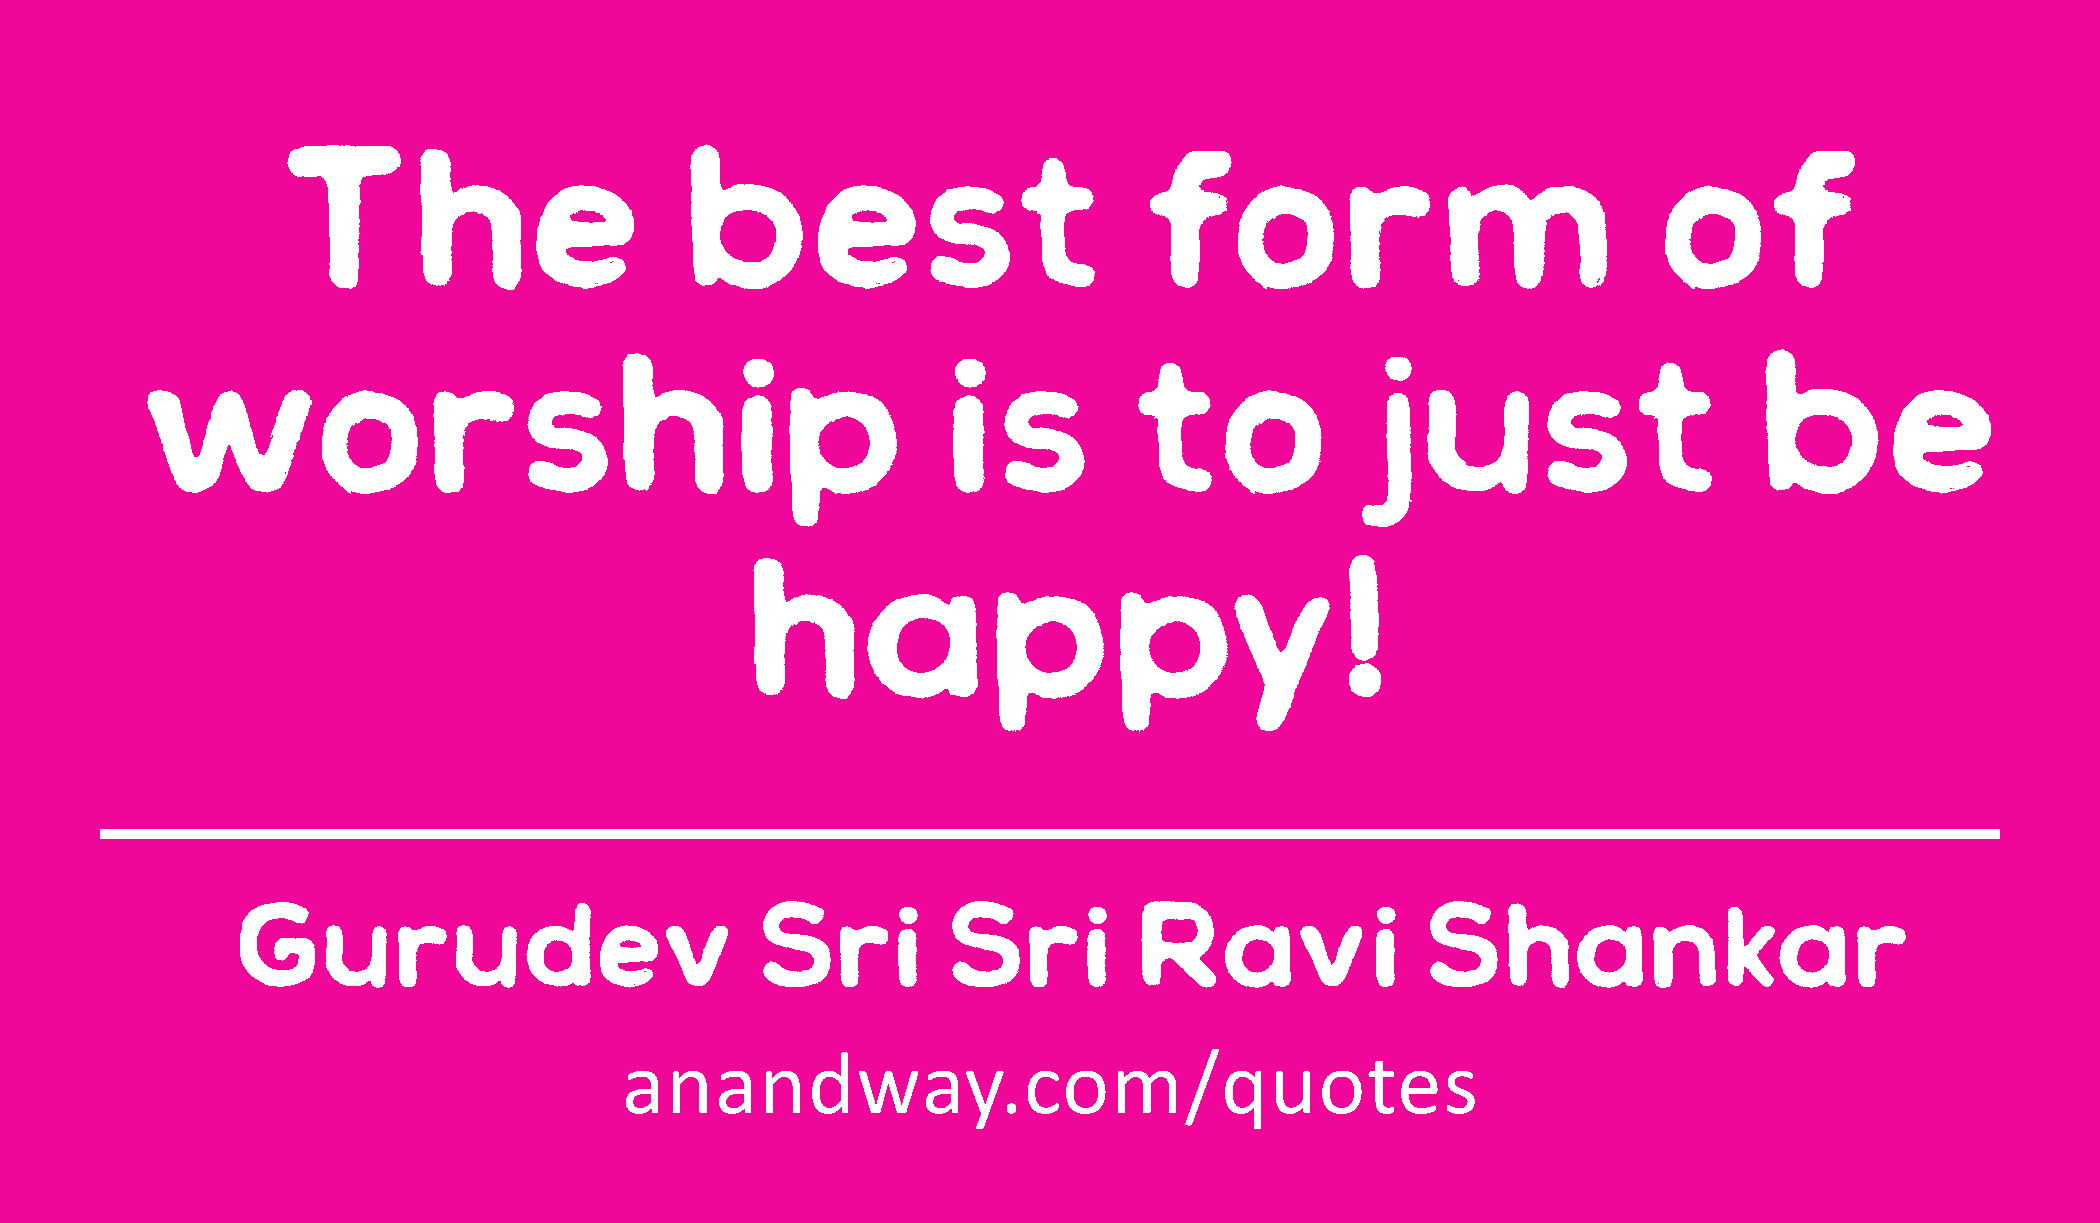 The best form of worship is to just be happy! 
 -Gurudev Sri Sri Ravi Shankar